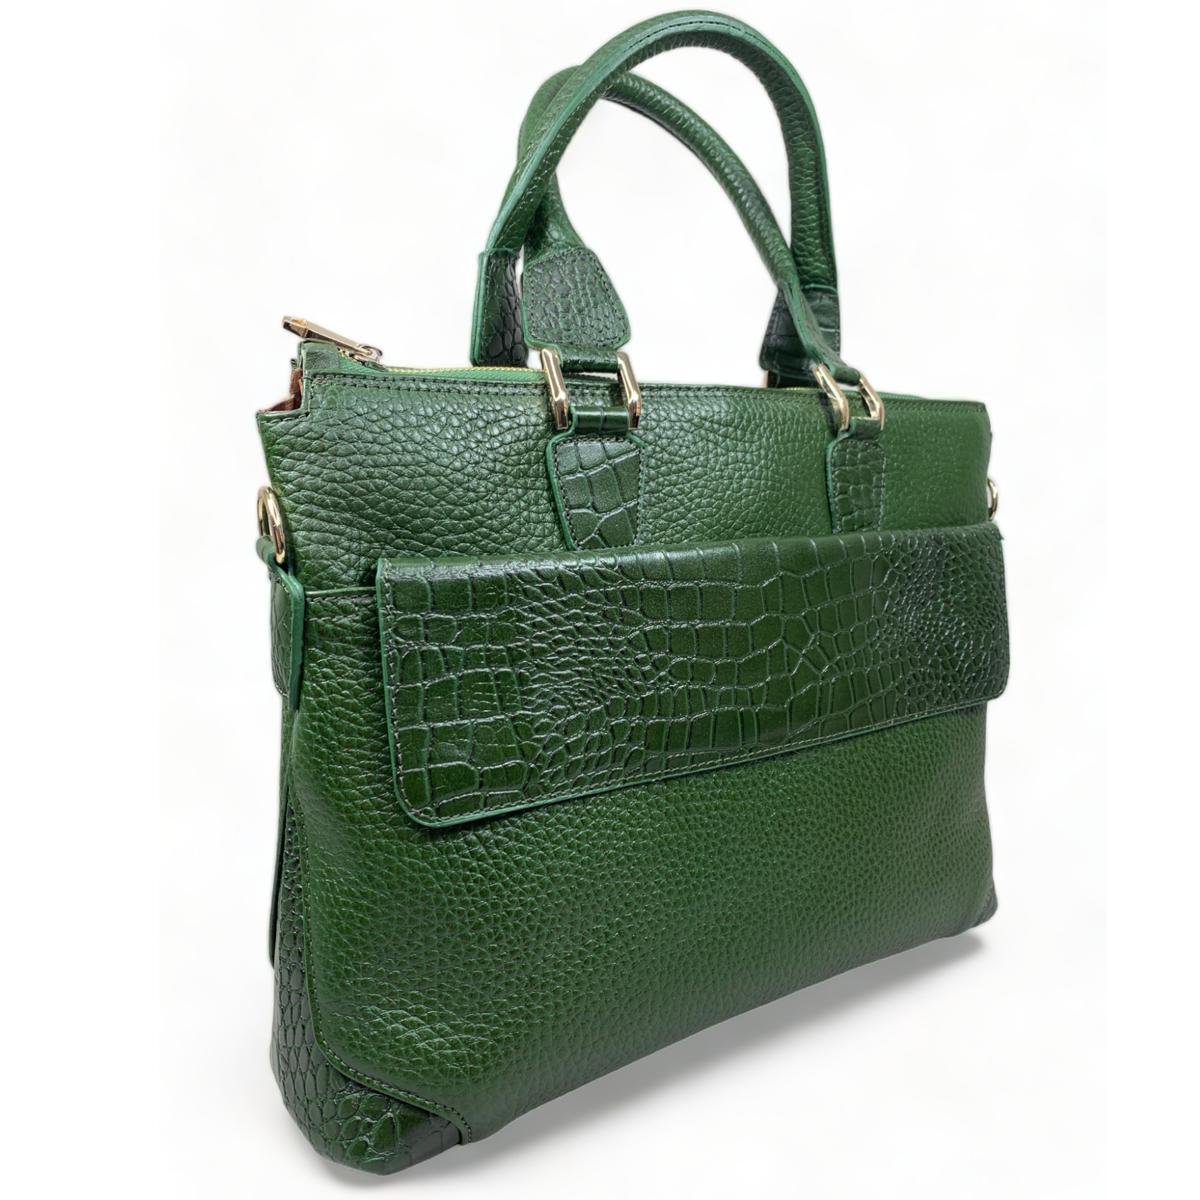 LeatherLuxe - Green Leather Unisex Bag; Laptop Bag; Large Bag Genuine leather Designer Premium leather bag for women leather hobo tote messenger bag Leather Accessories Leather Shop Leather Goods